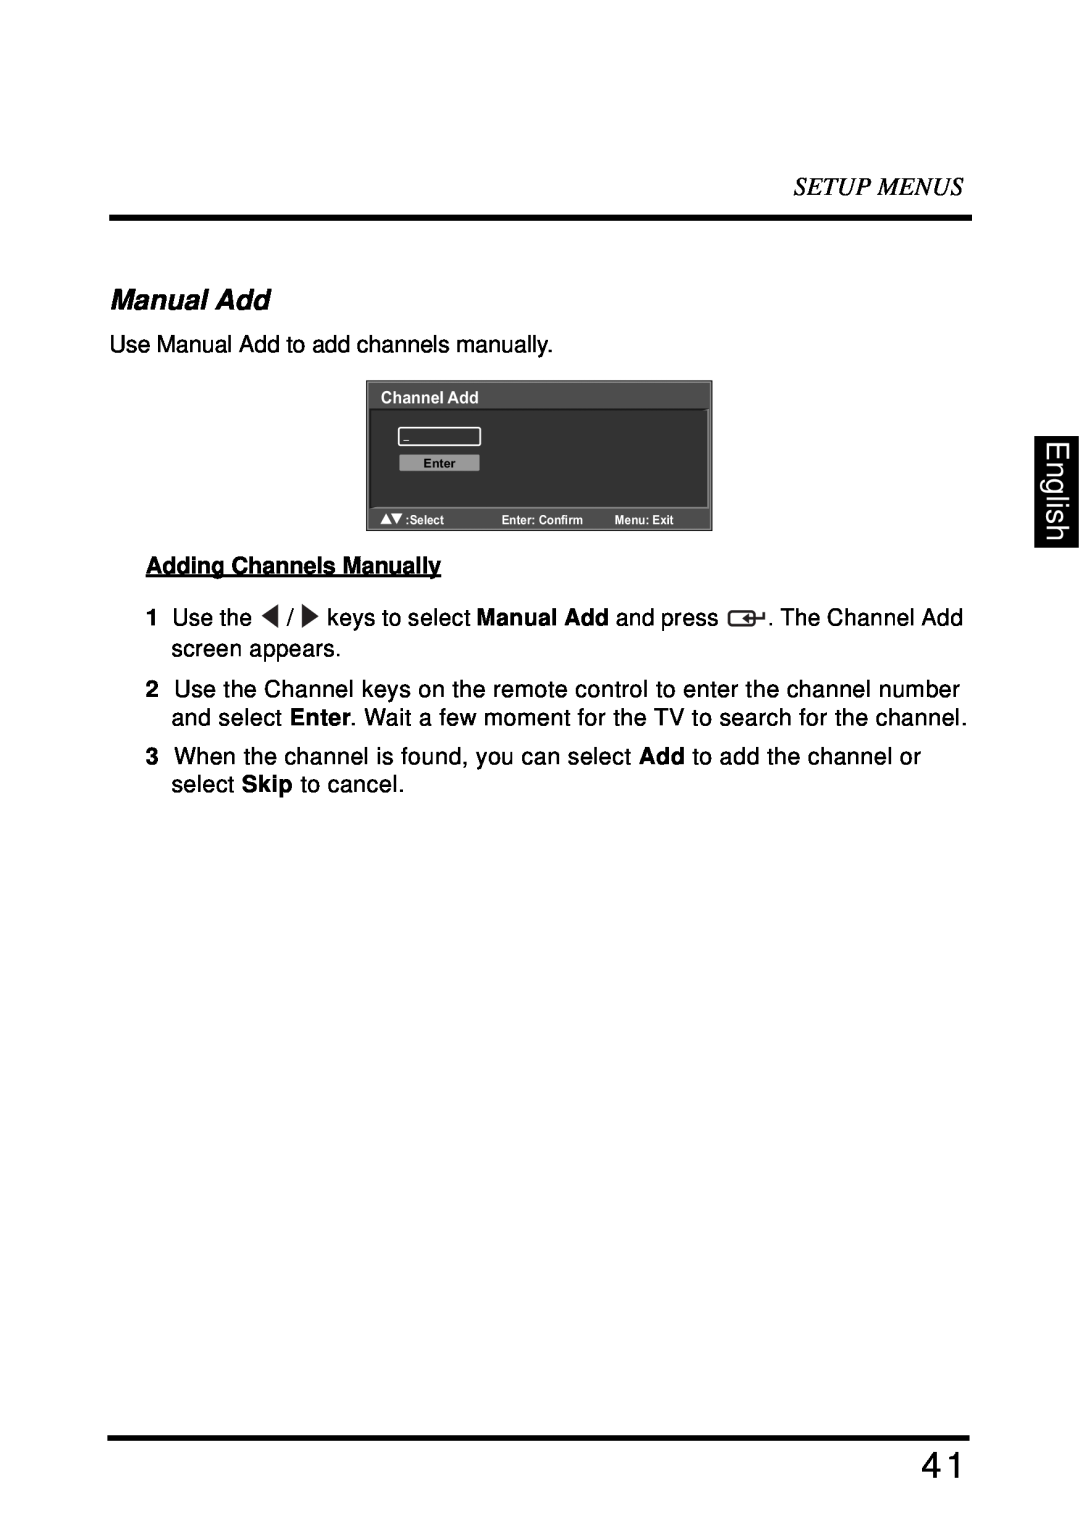 Westinghouse LD-4680 user manual Manual Add, English, Setup Menus, Adding Channels Manually 